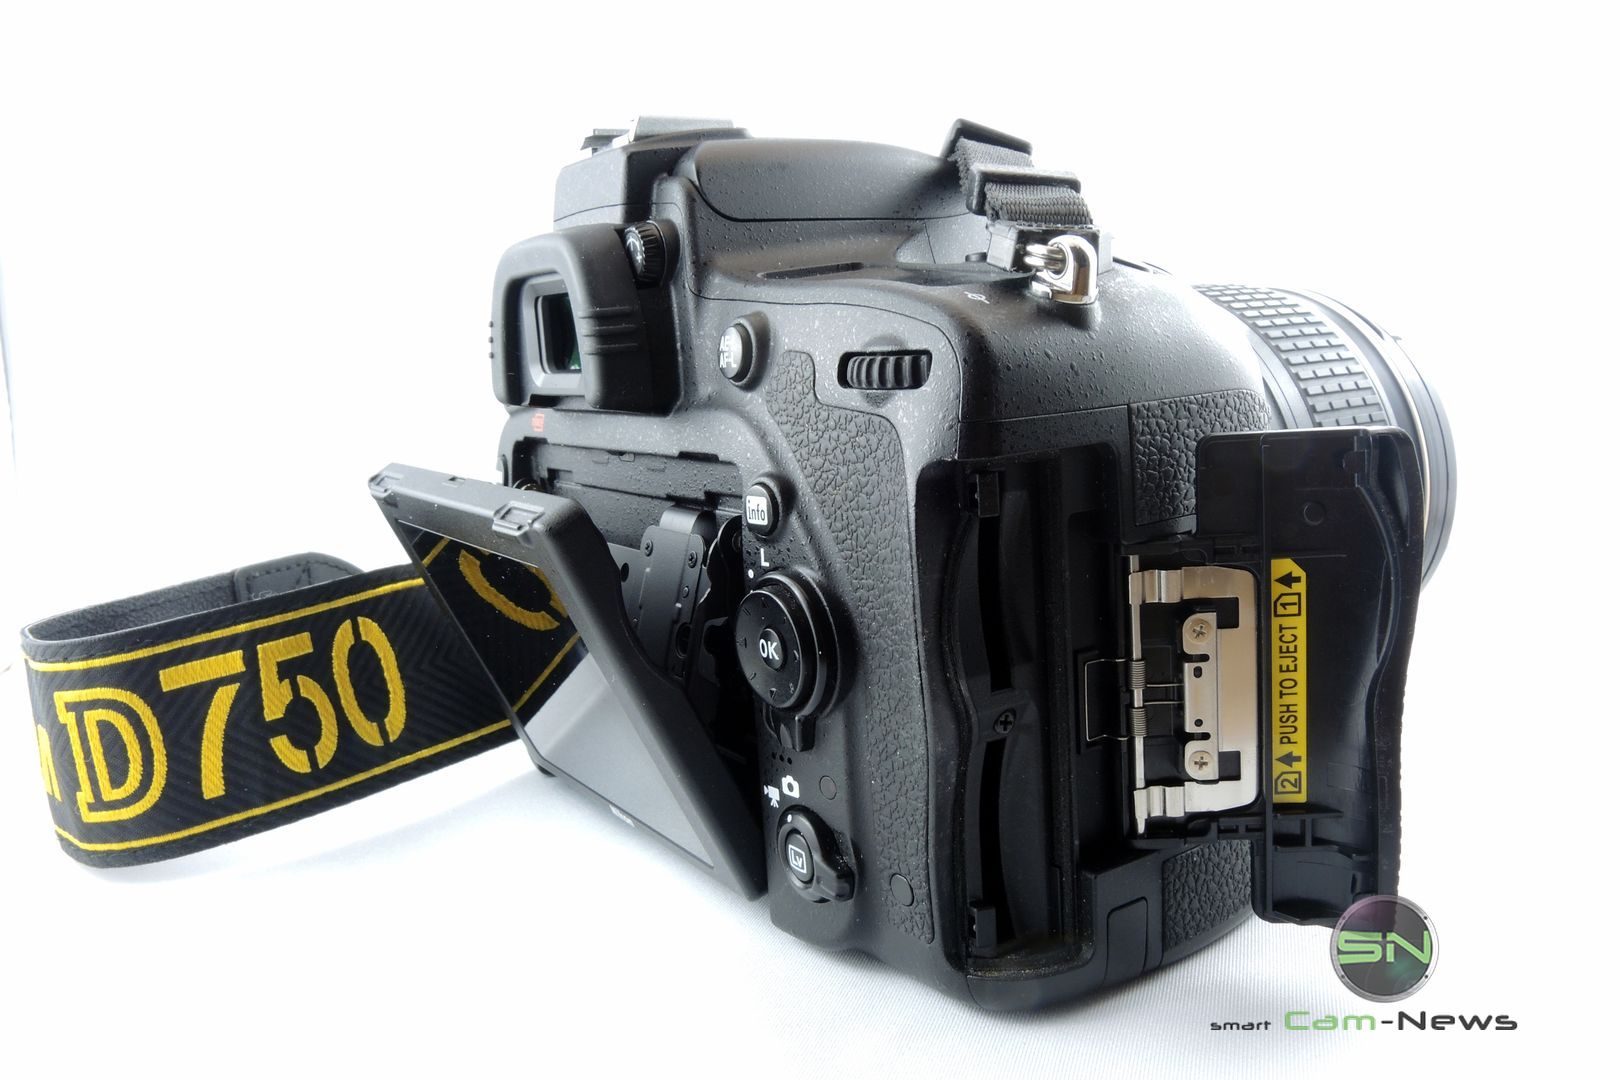 doppelter SD Schacht - Nikon D750 - SmartCamNews